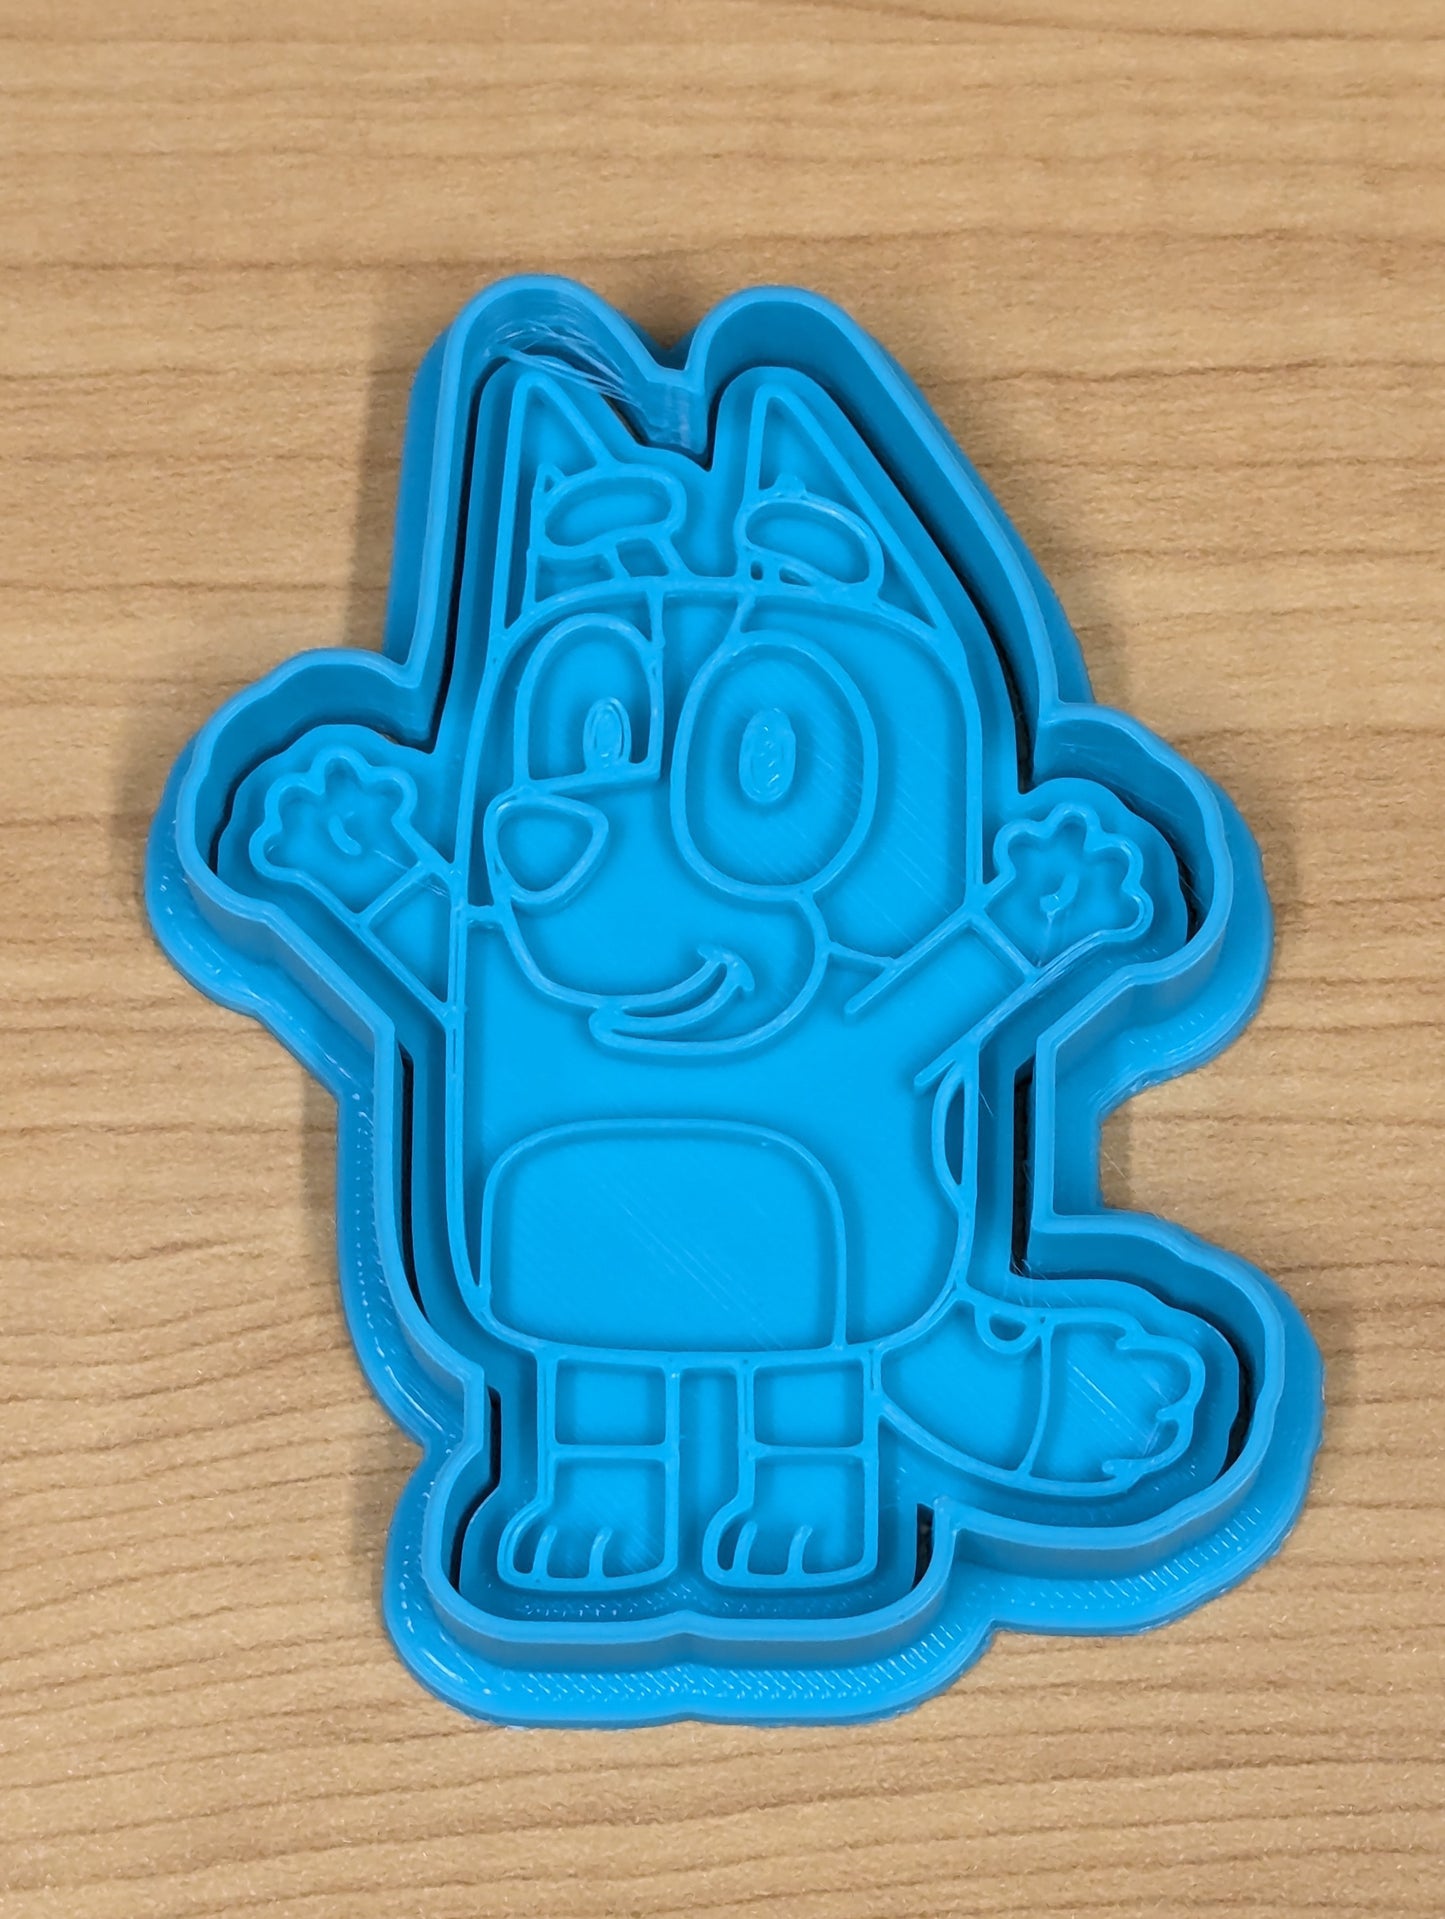 Bluey - Bingo Cookie Cutter and Embosser - 8.3cm x 6.4cm